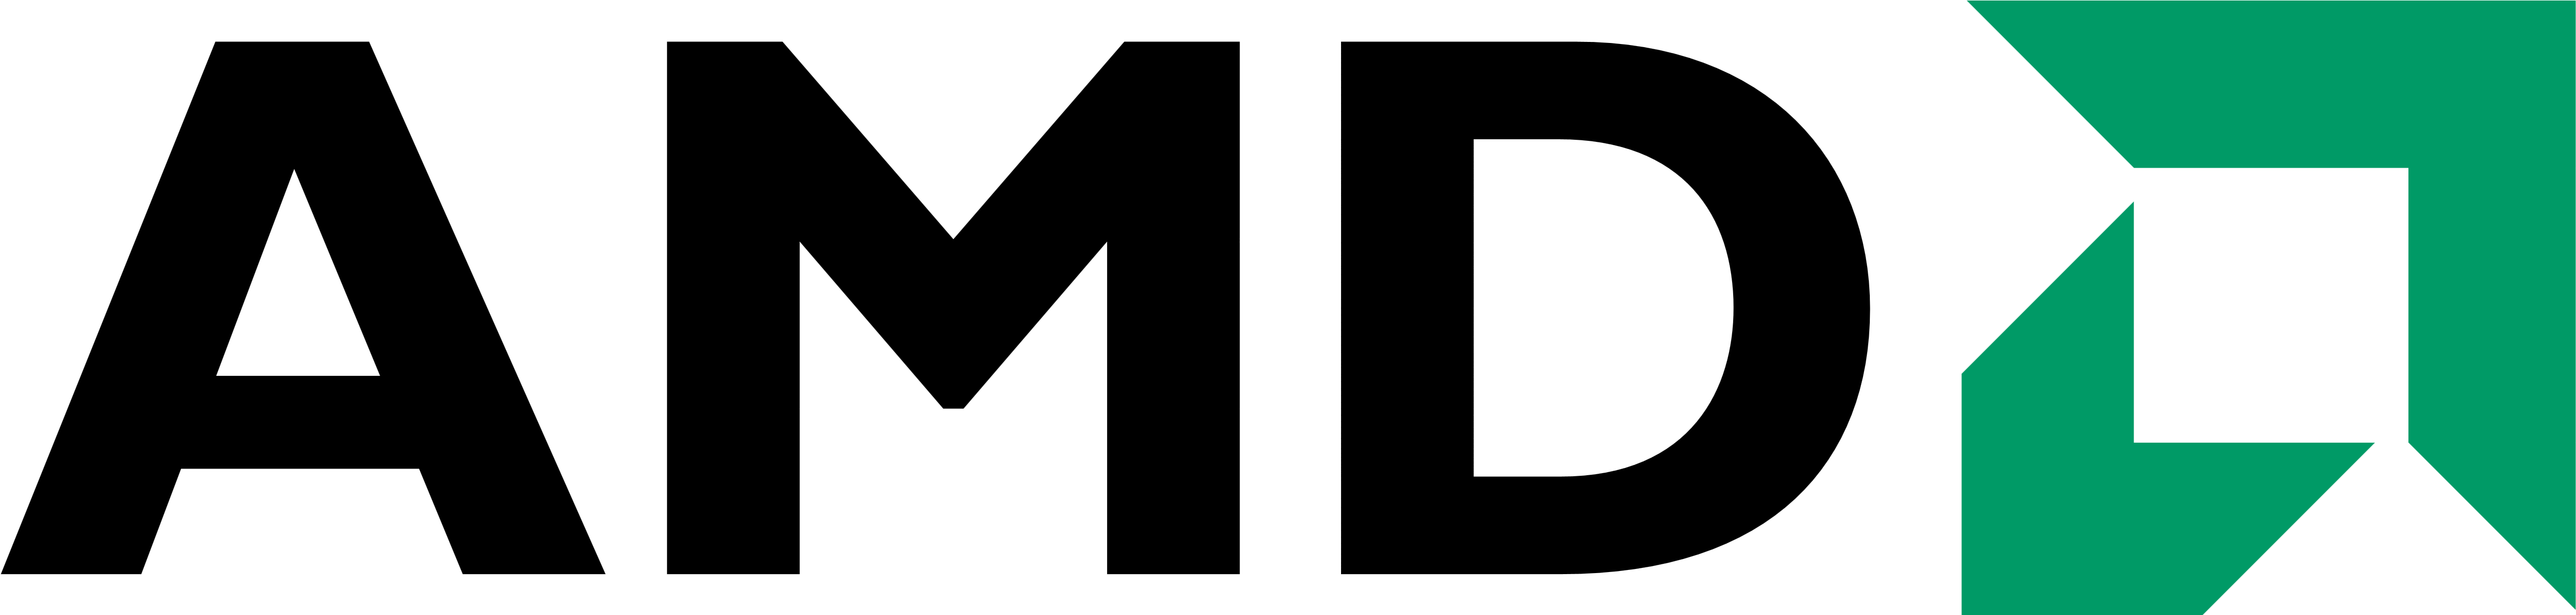 Amd Logo, Logotype - Amd Logo .png Clipart (5000x1187), Png Download